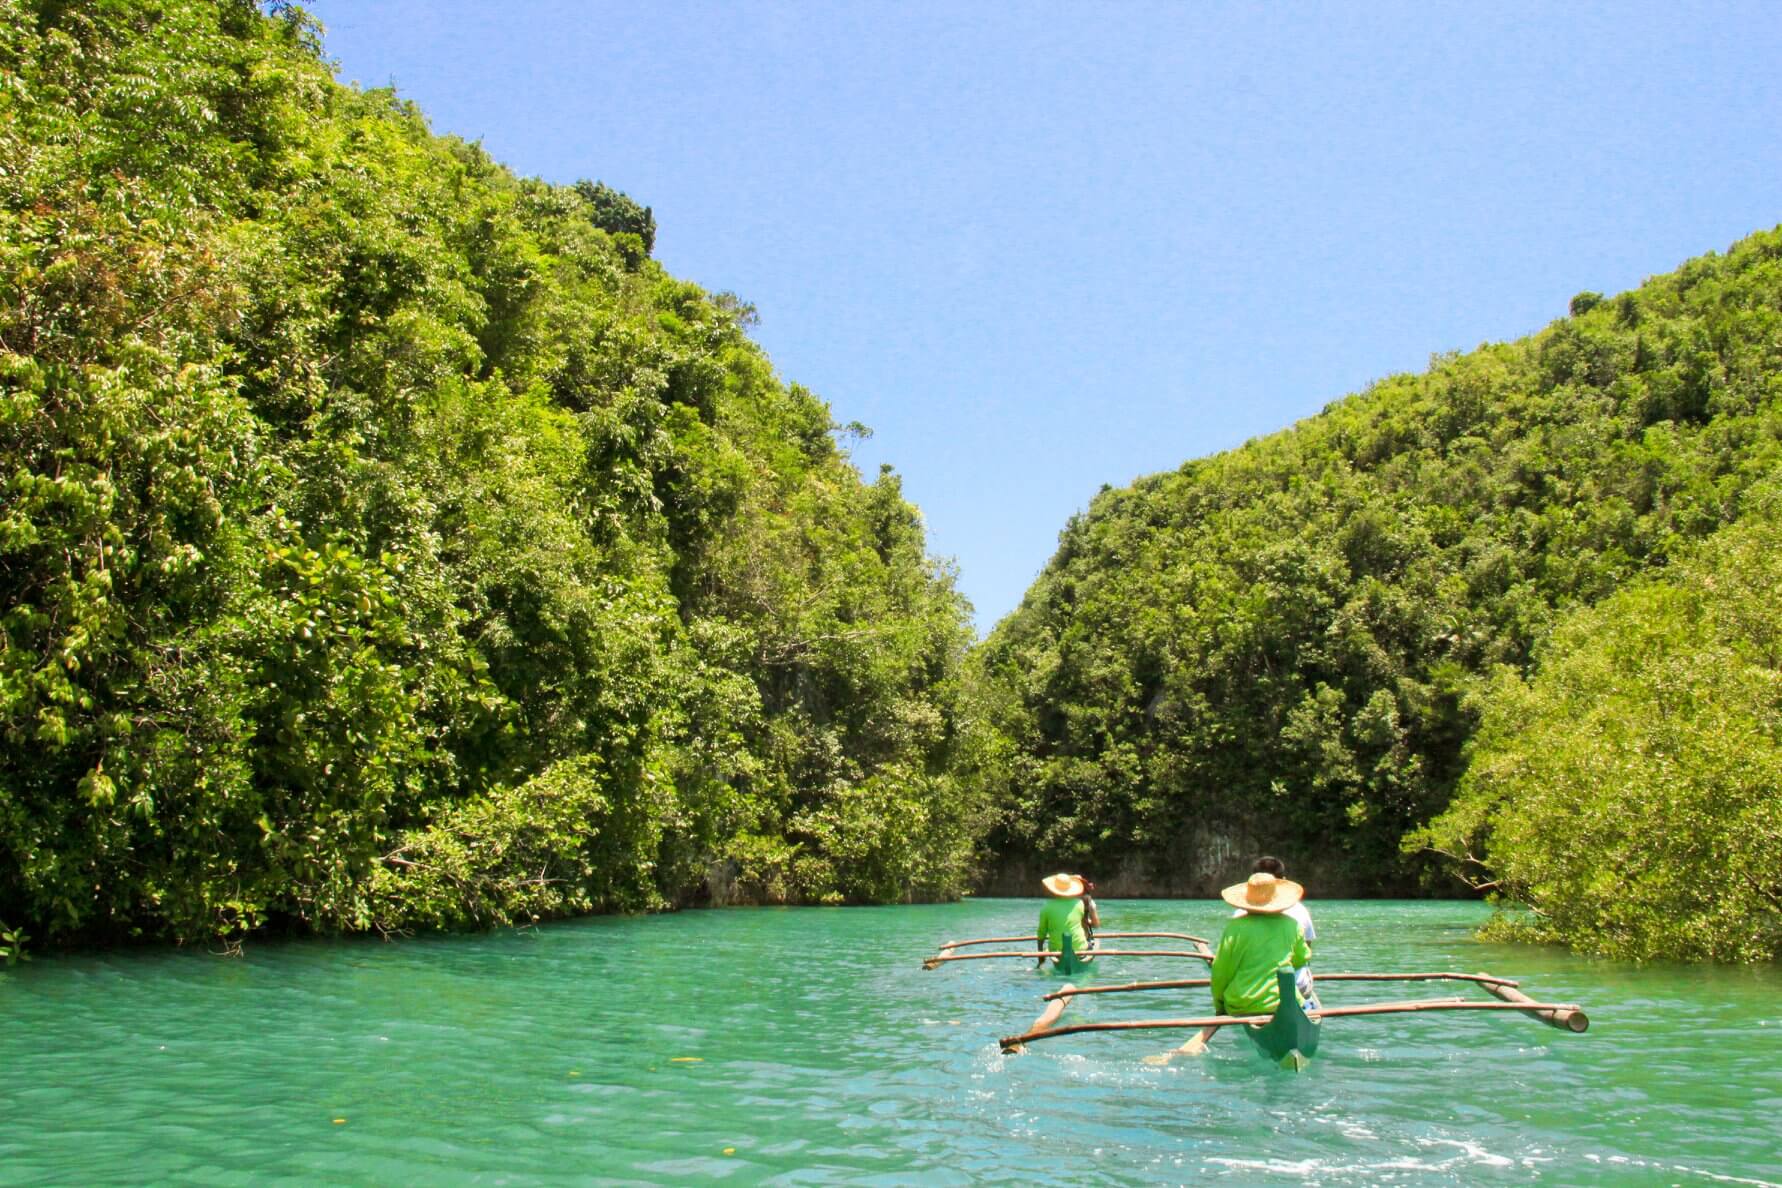 Bojo River is one of the top Cebu tourist spots